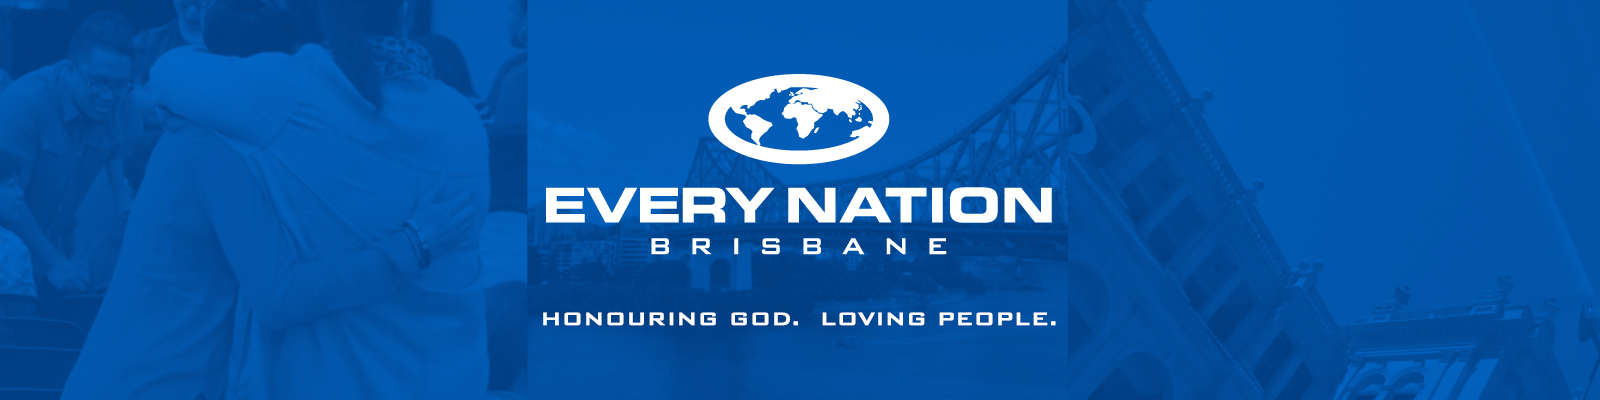 Every Nation Brisbane::Sunday Service